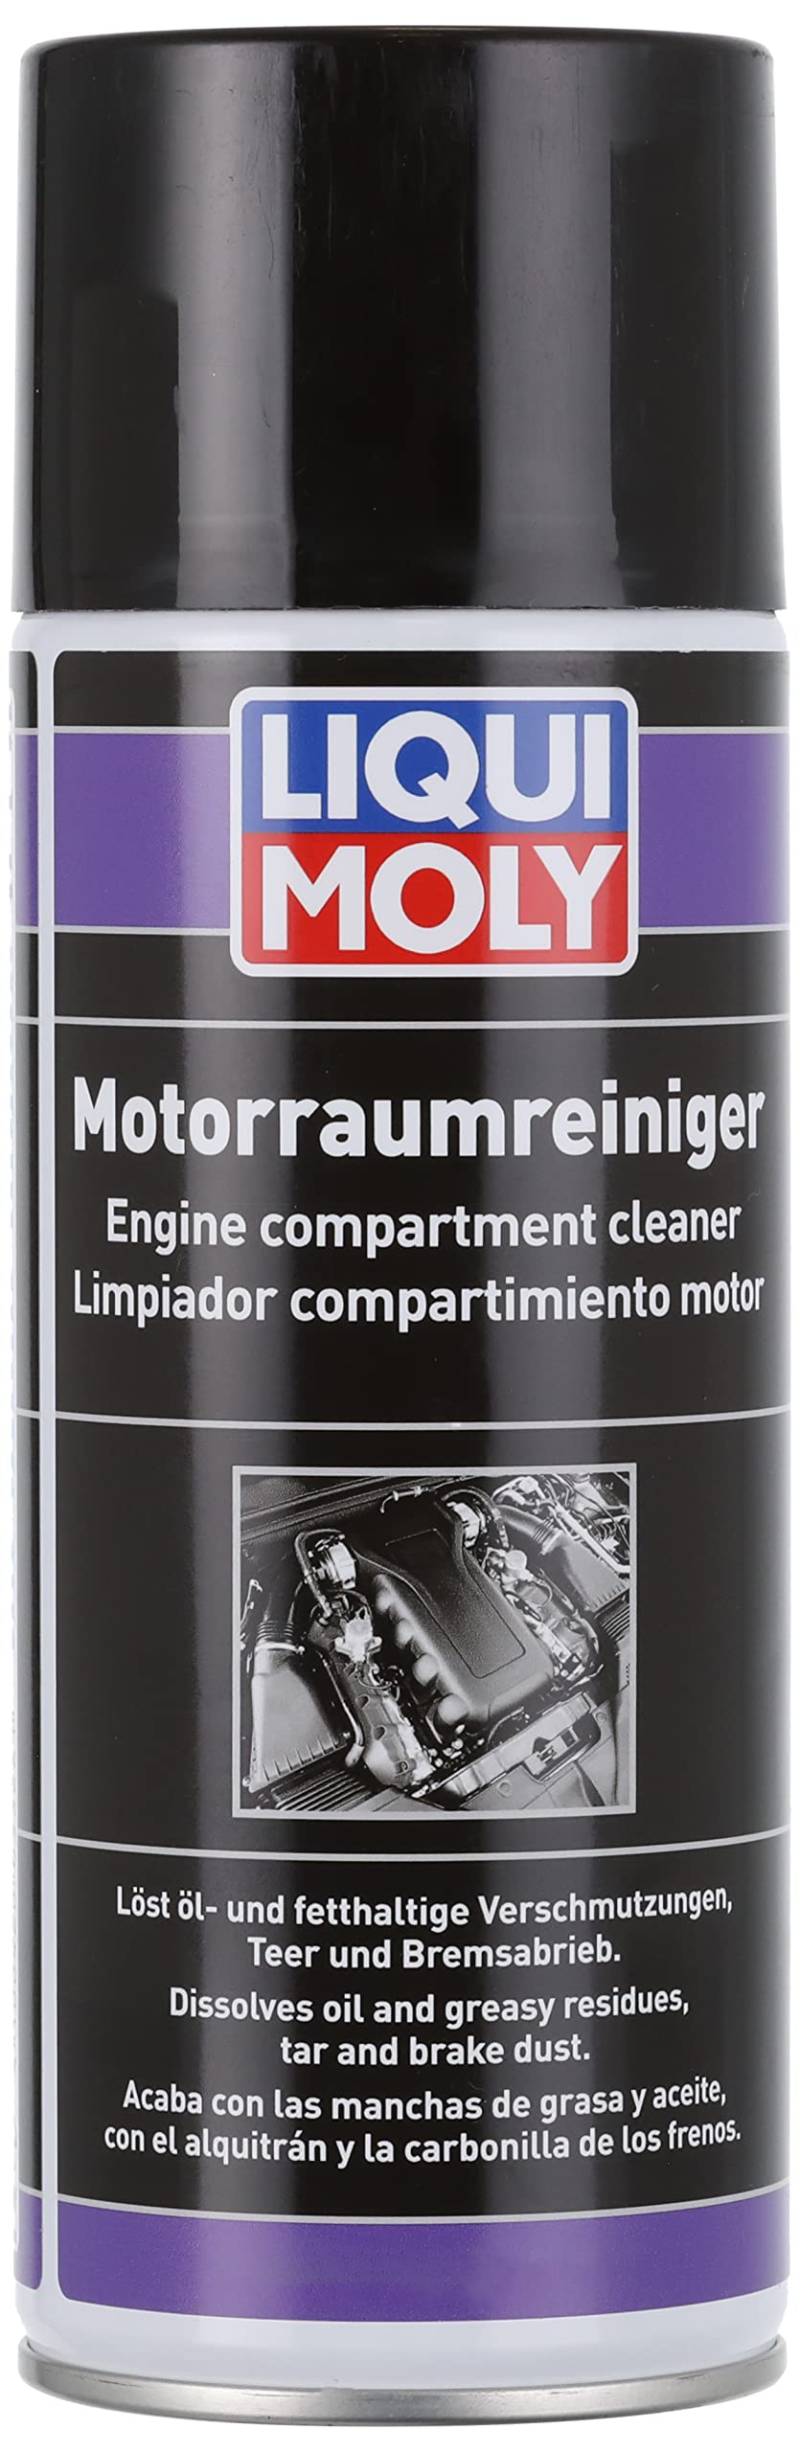 LIQUI MOLY Motorraumreiniger | 400 ml | Autopflege | Art.-Nr.: 3326, 1 Packung, farblos von Liqui Moly